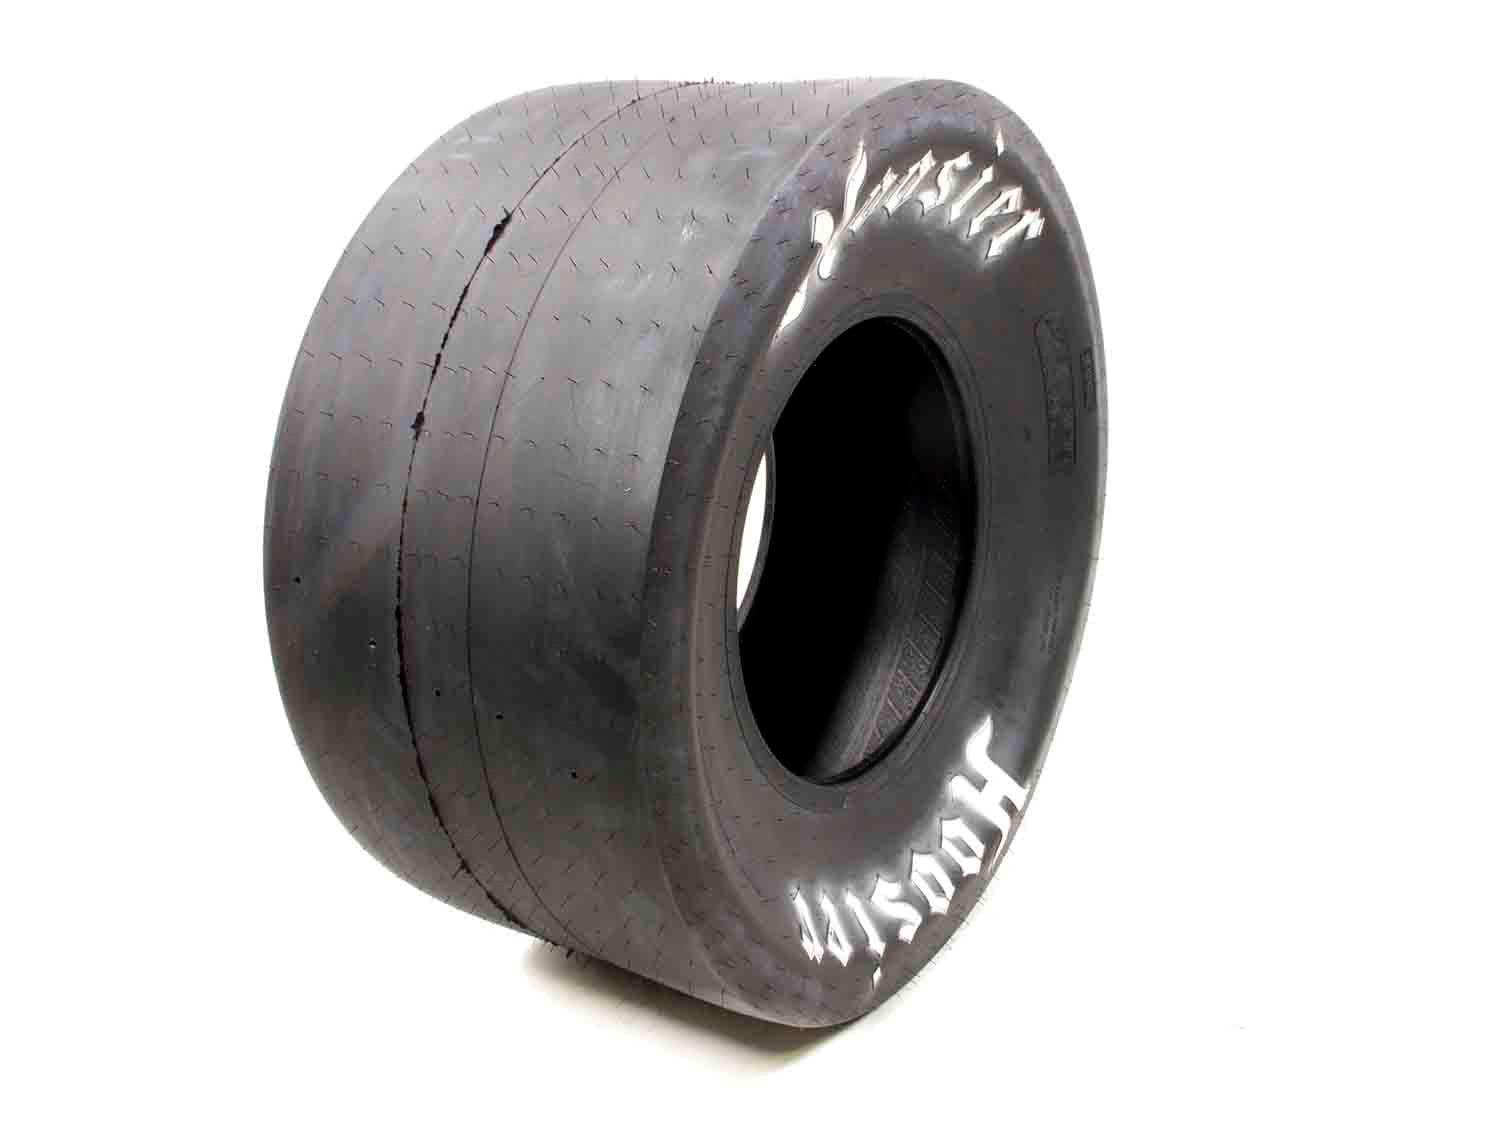 26.0/8.5-15 Drag Tire - Burlile Performance Products